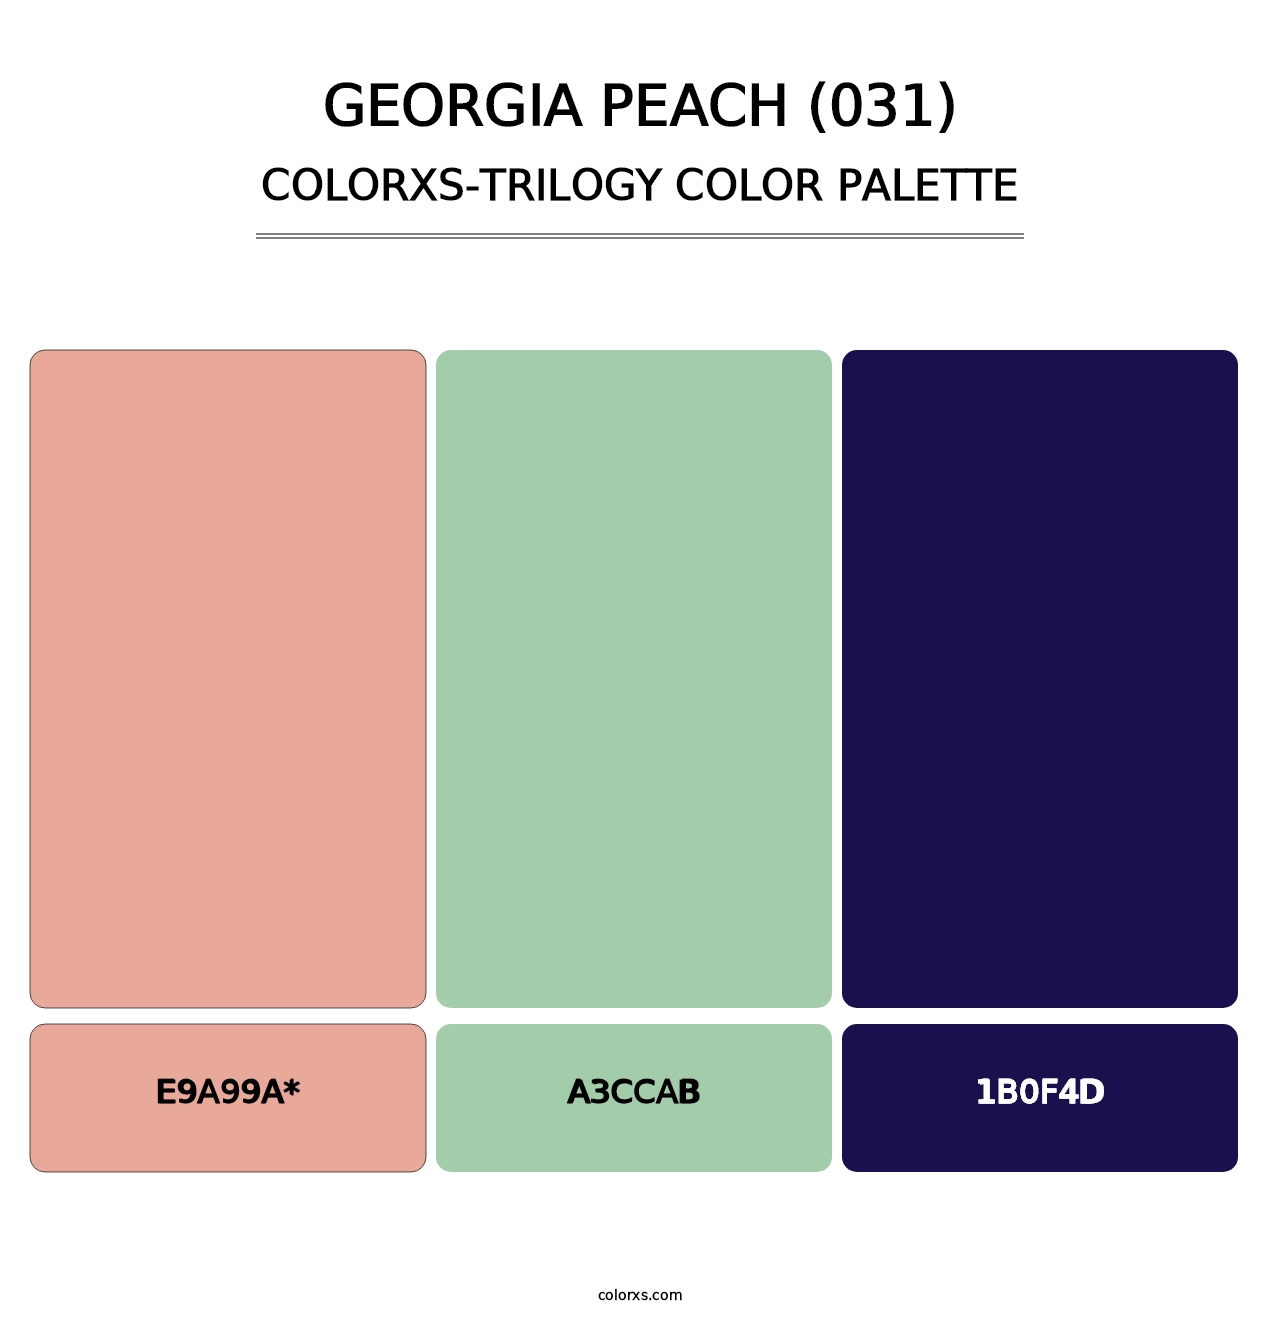 Georgia Peach (031) - Colorxs Trilogy Palette